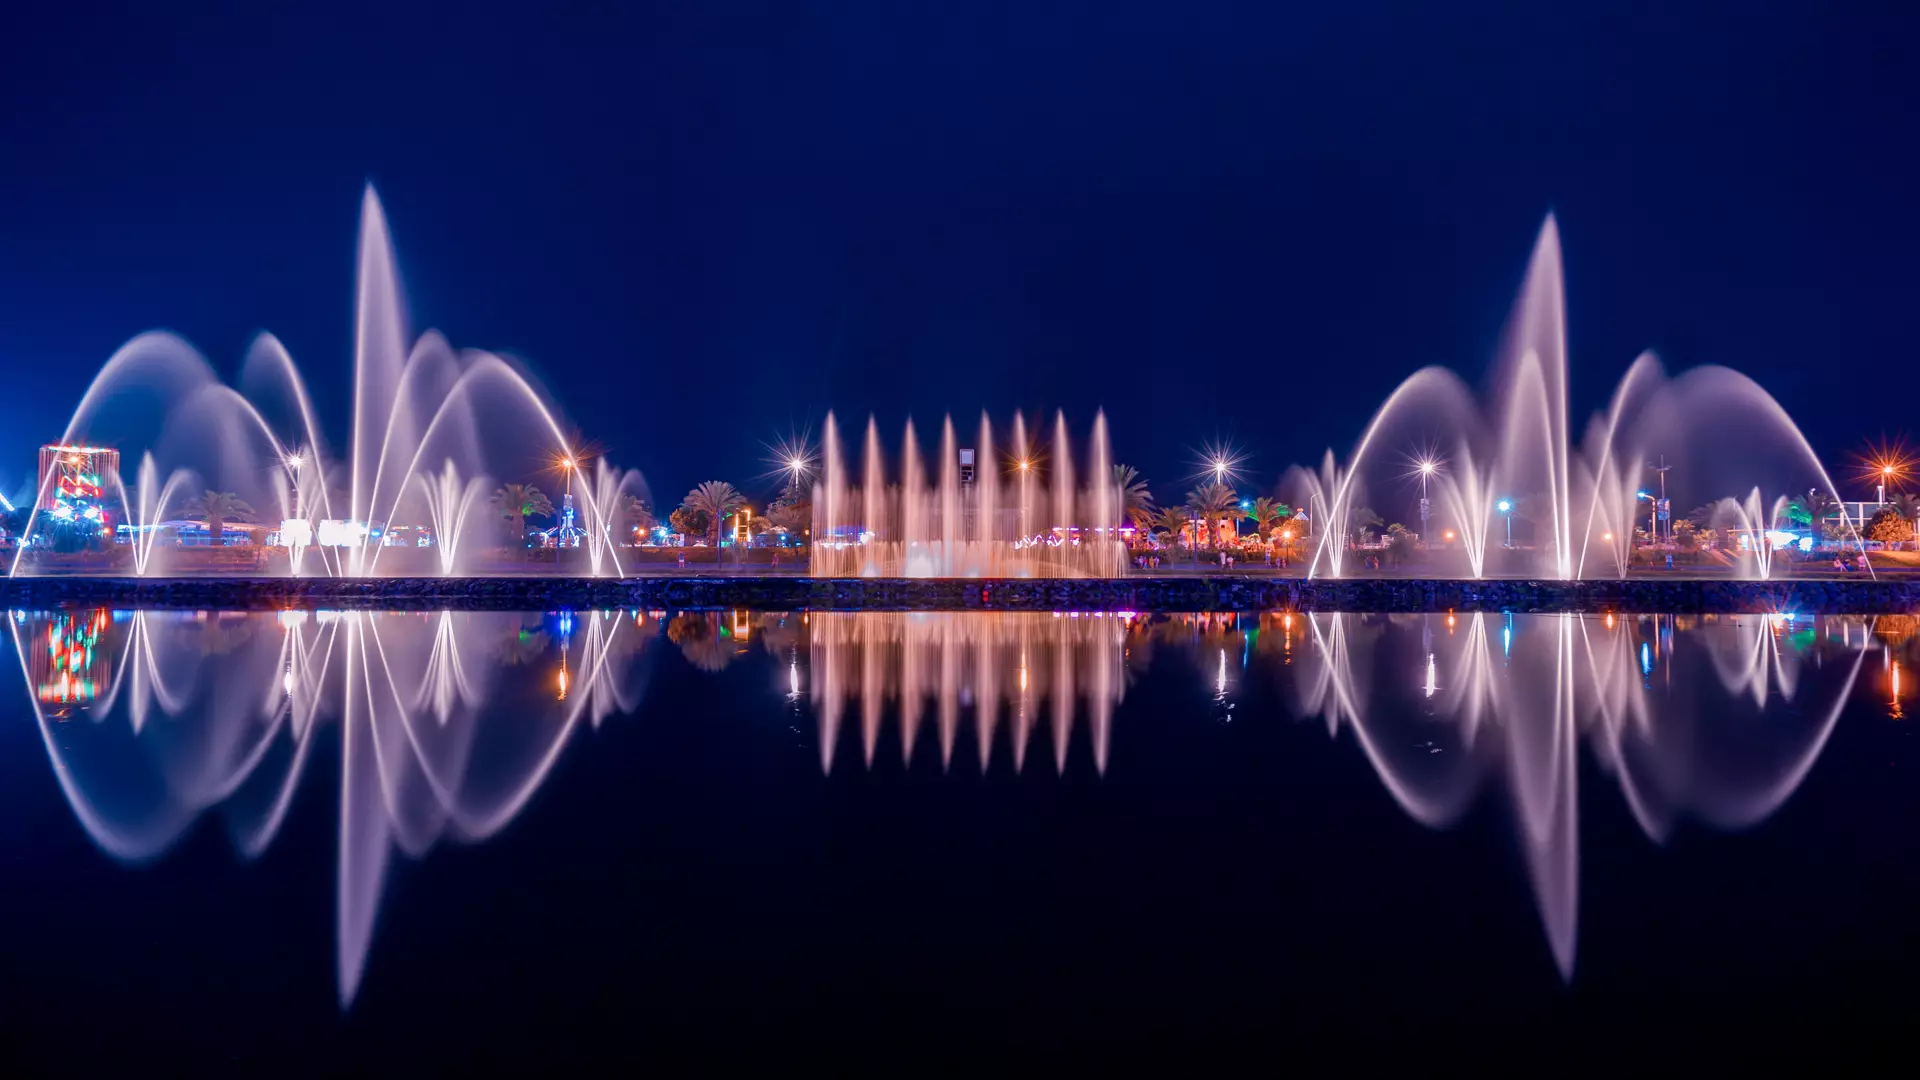 Dancing fountains - a landmark of Batumi